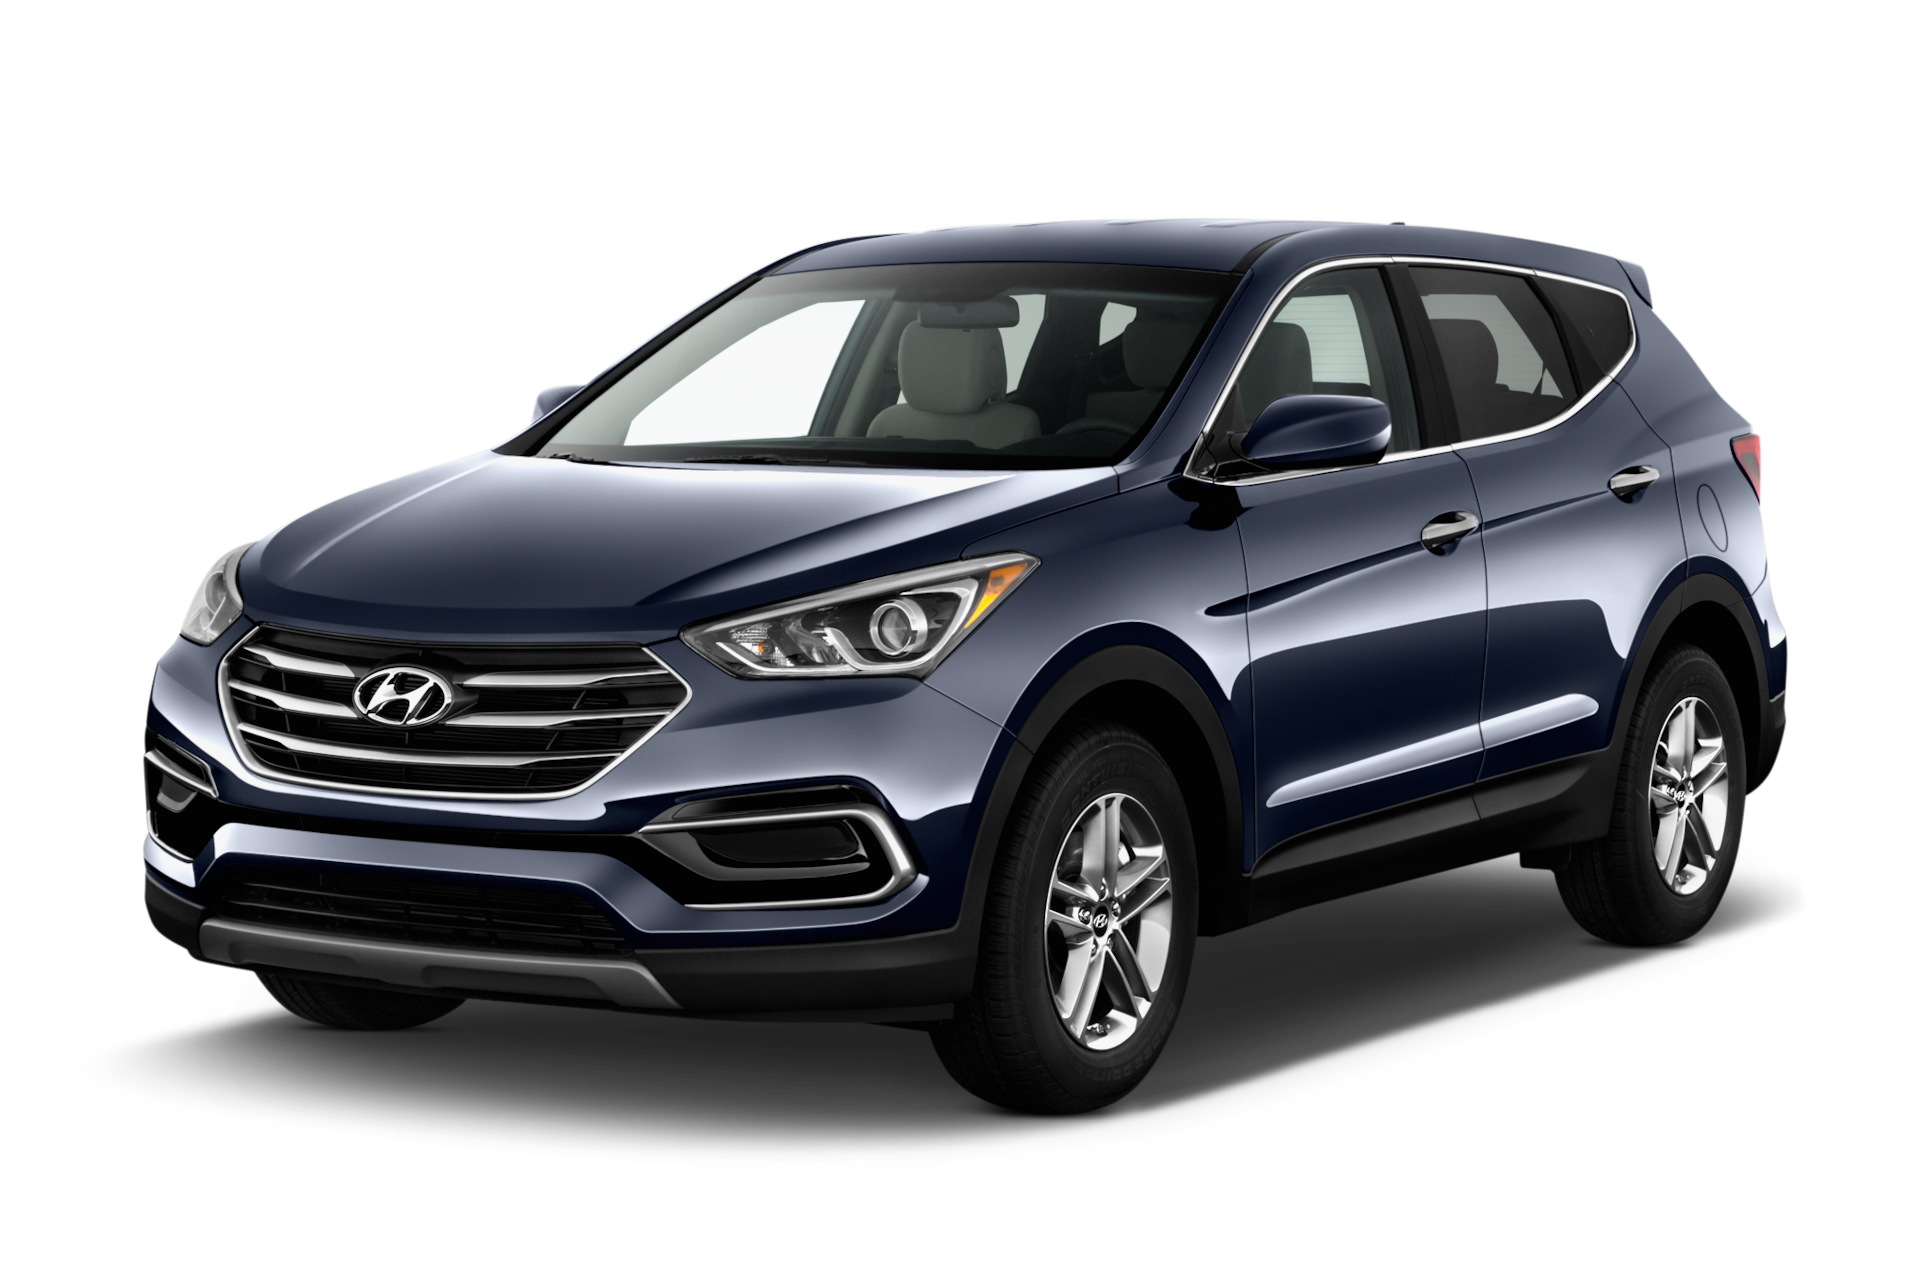 2017 Hyundai Santa Fe Sport Prices, Reviews, and Photos - MotorTrend